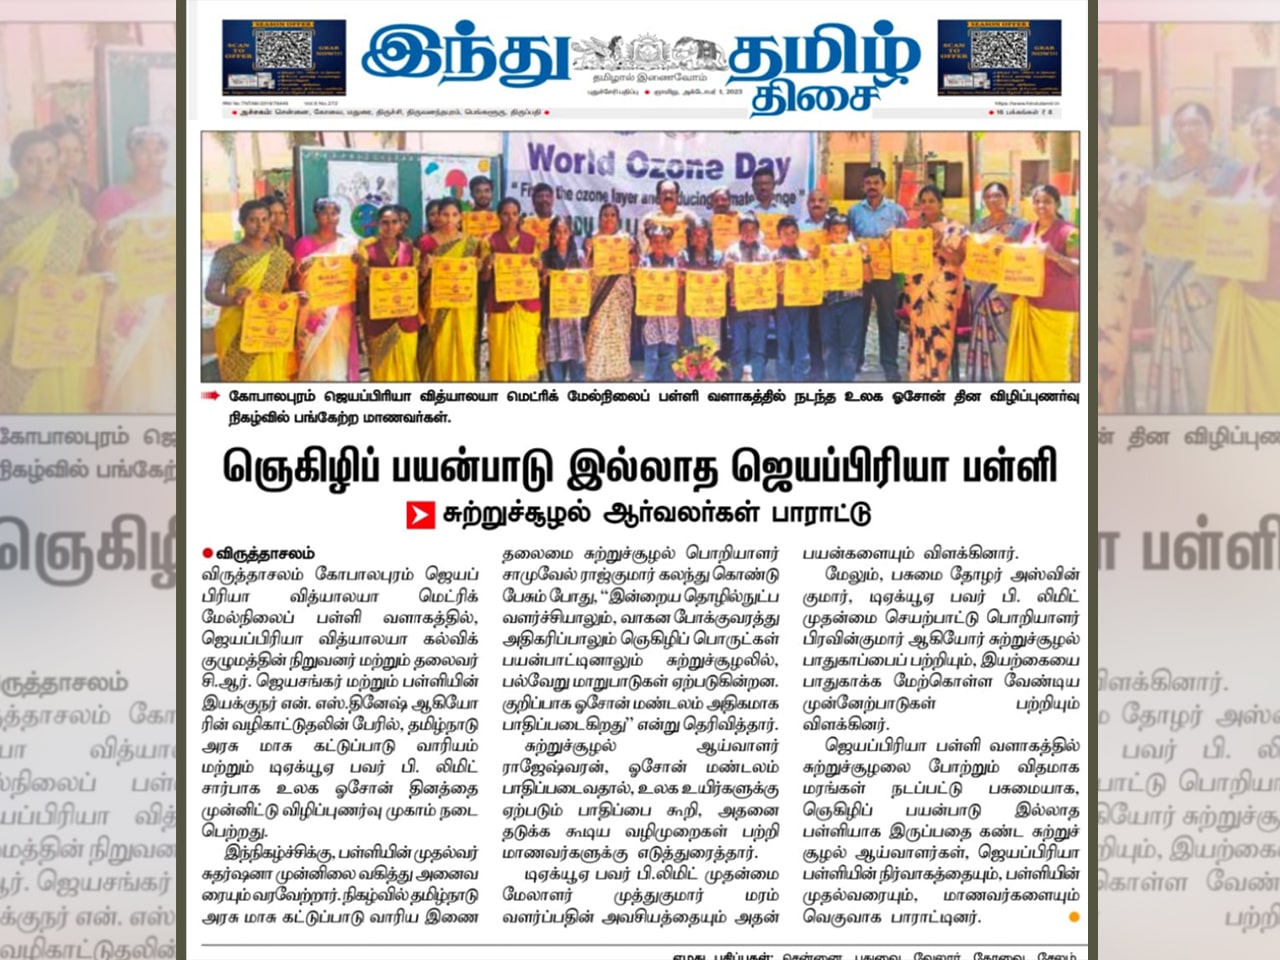 HINDU TAMIL- Jayapriya Vidyalaya Matriculation High School Holds Awareness Camp on World Ozone Day.